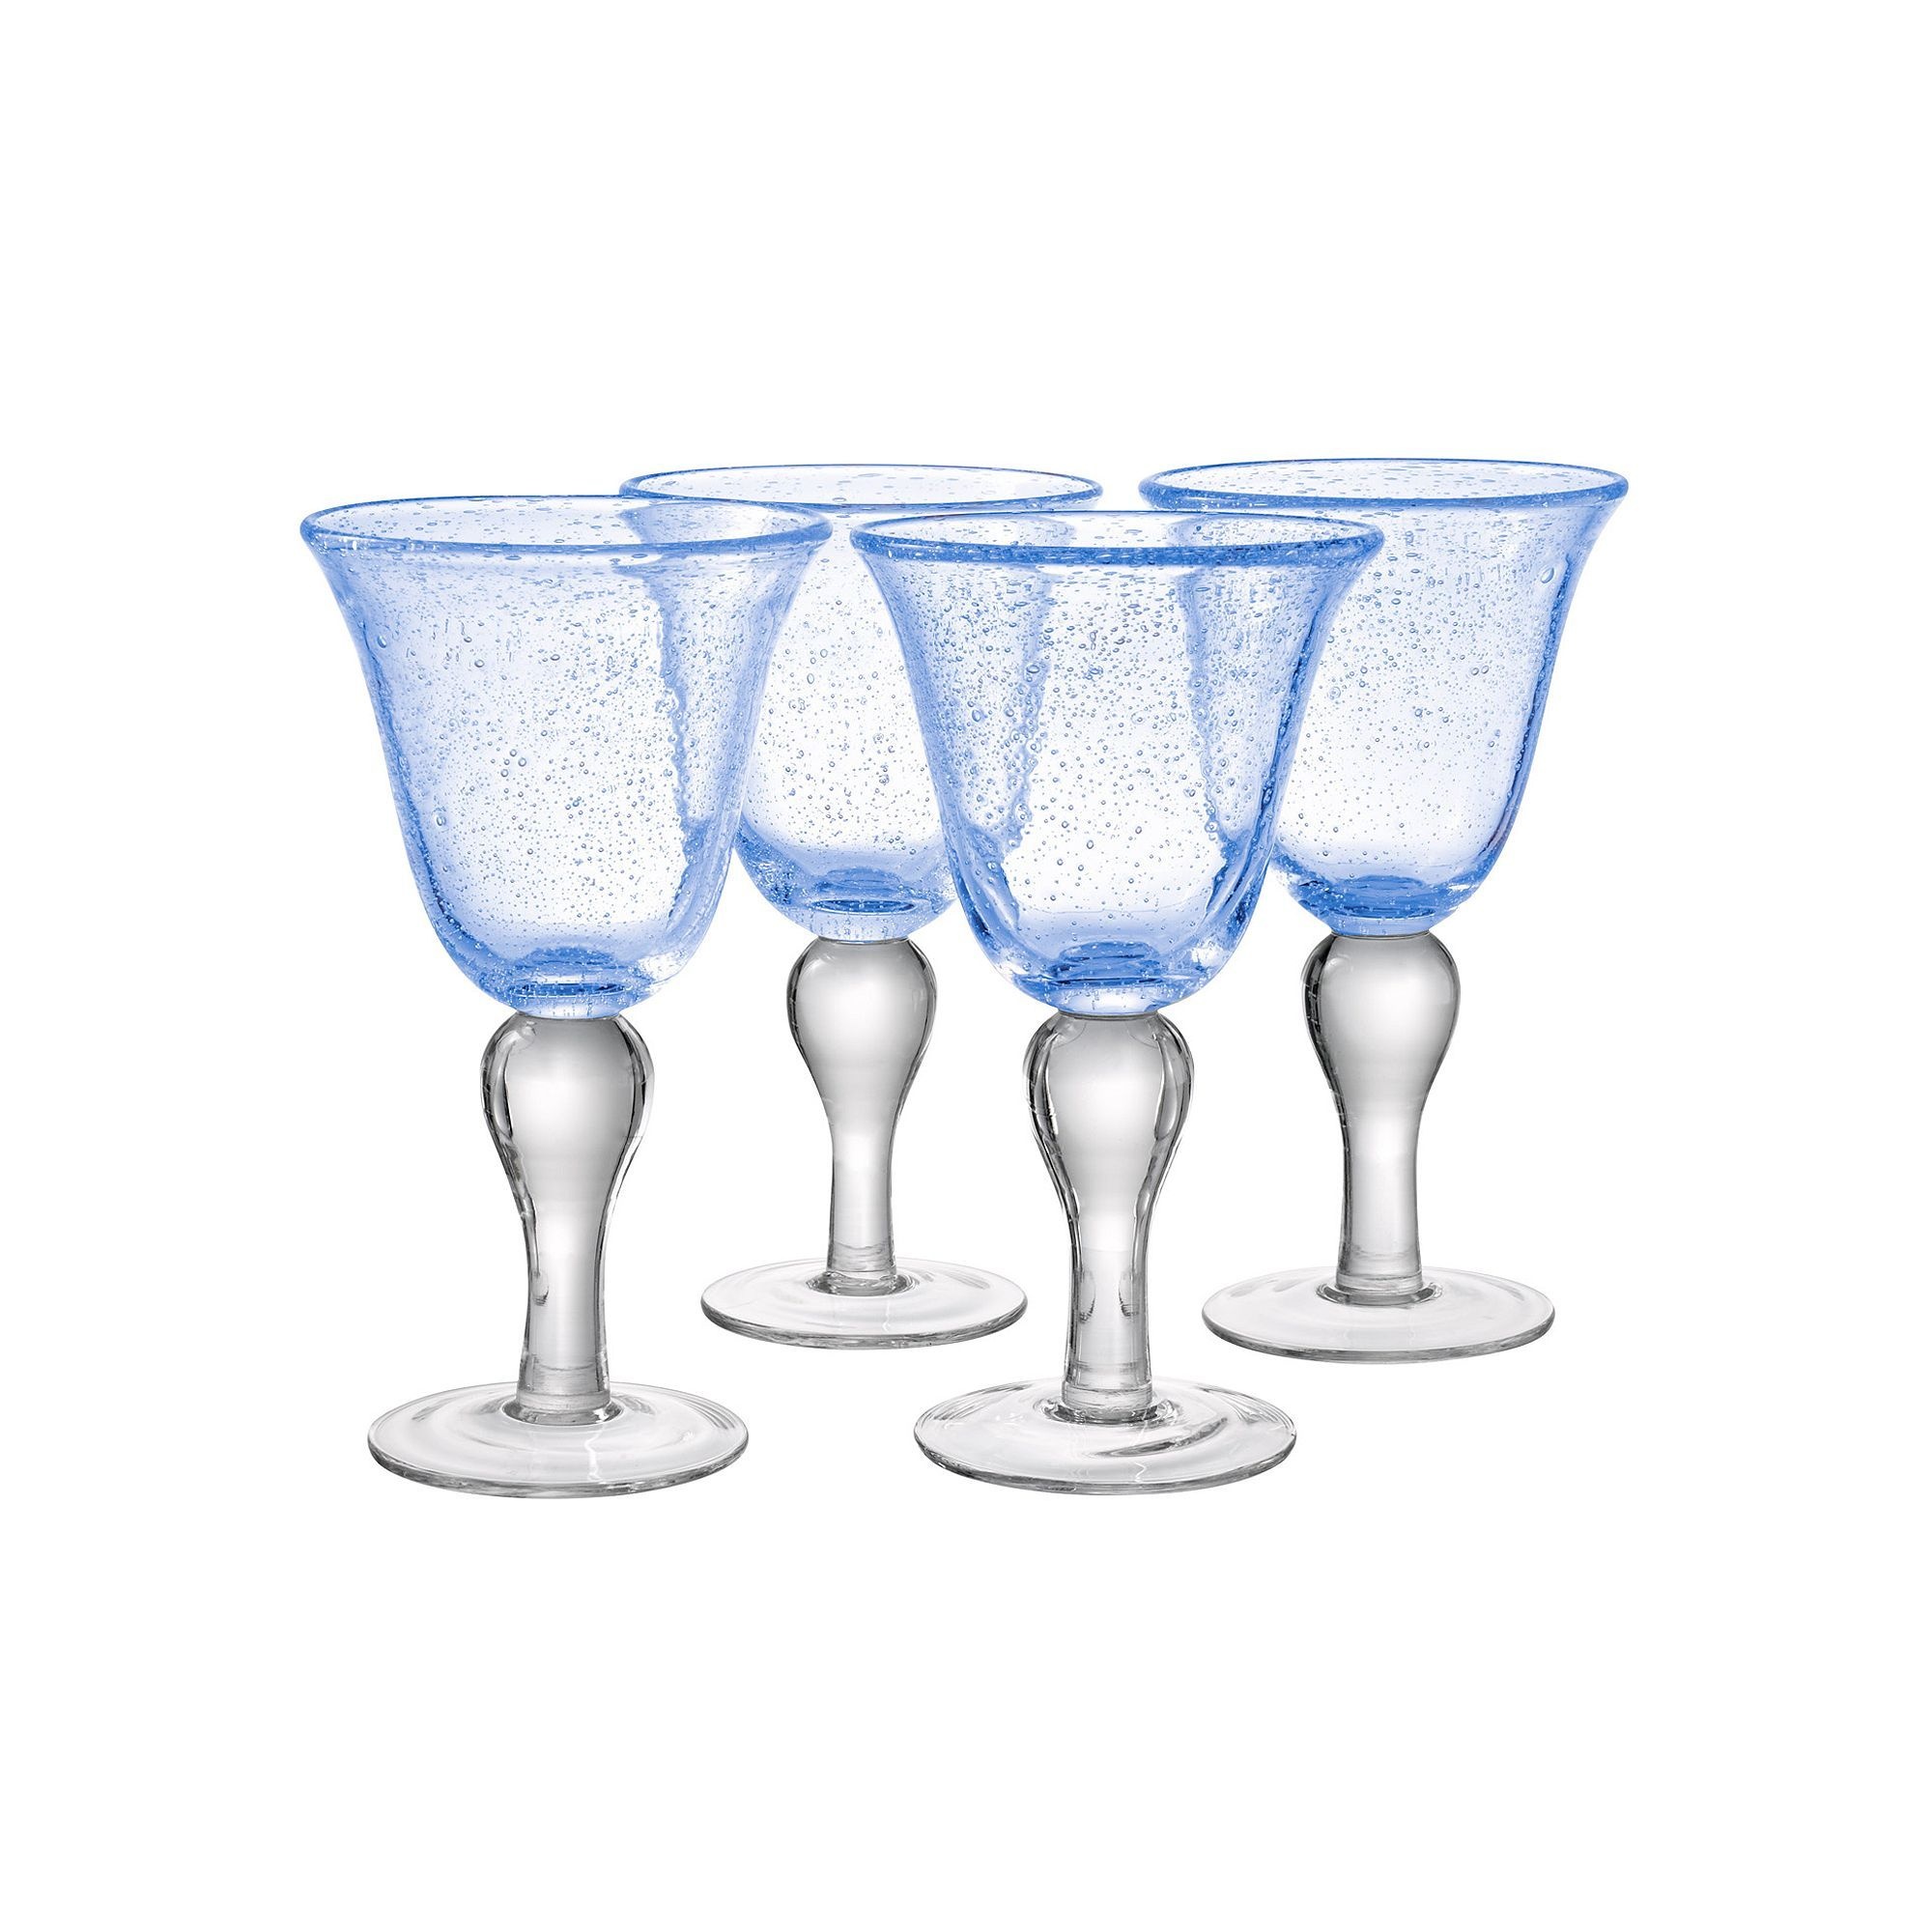 Artland iris, Goblet set, Blue wine glasses, Glassware, 2000x2000 HD Handy